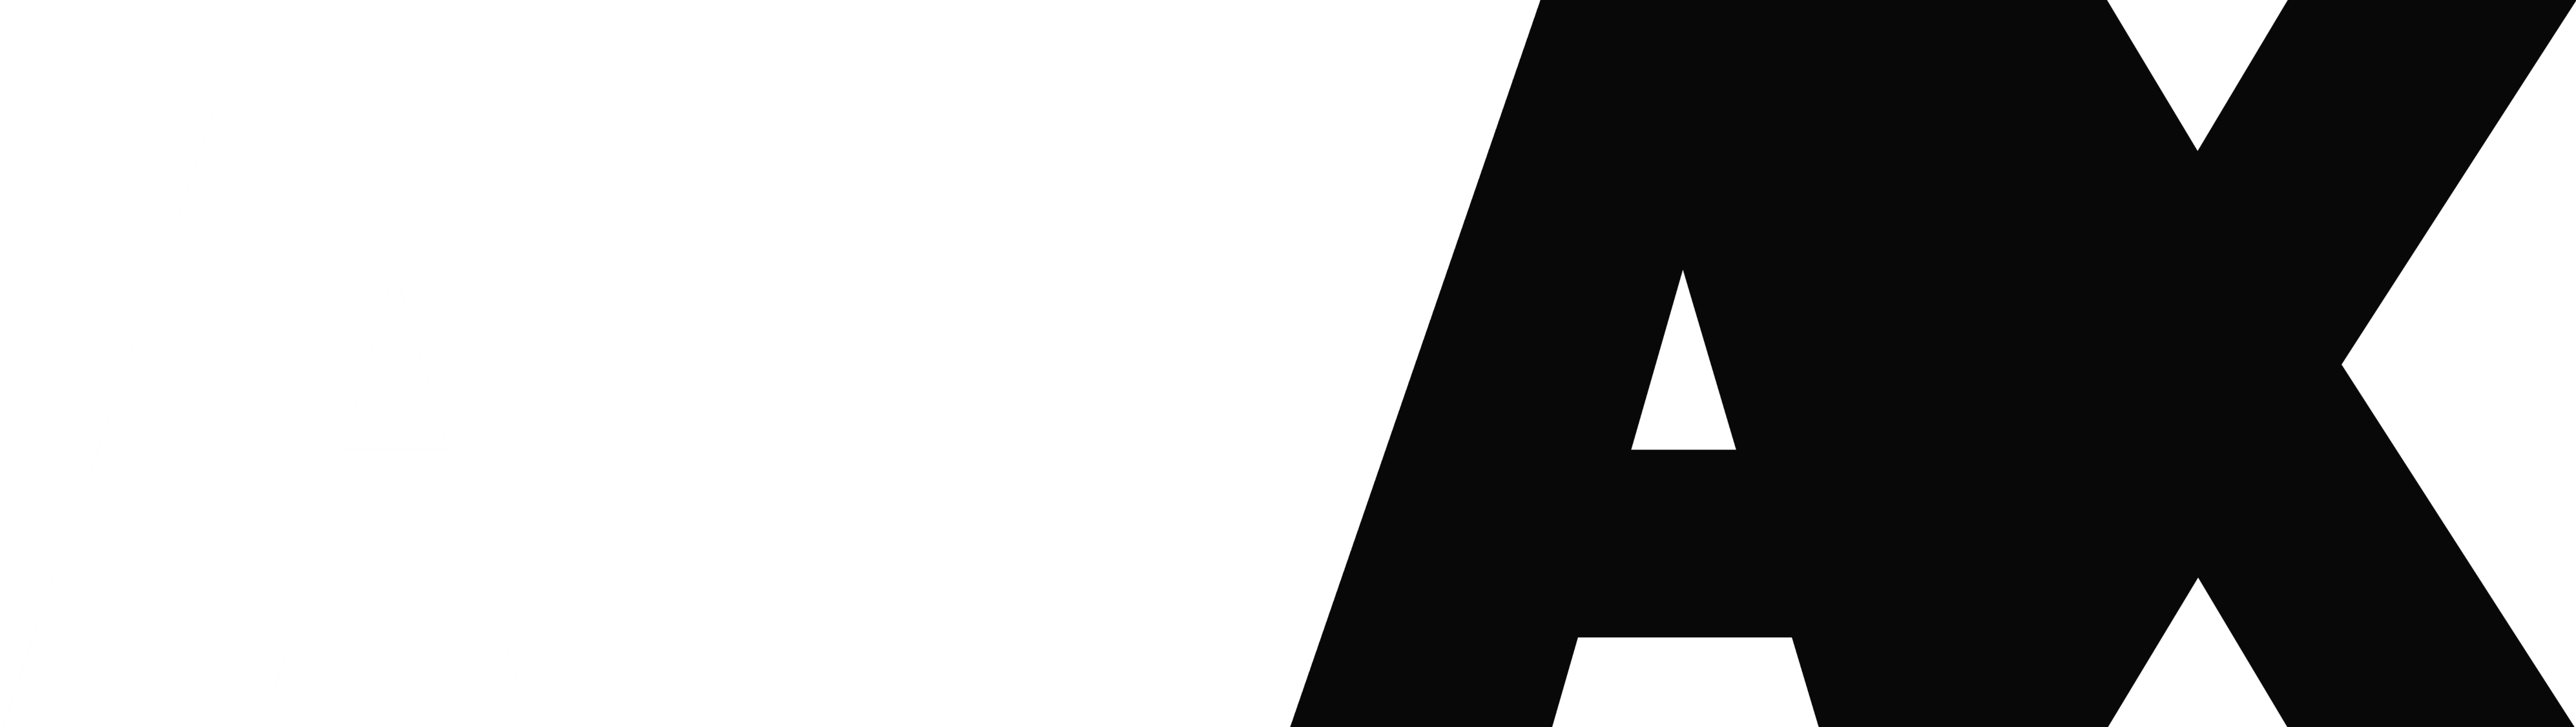 AX (2013-) logos by ArianVP on DeviantArt